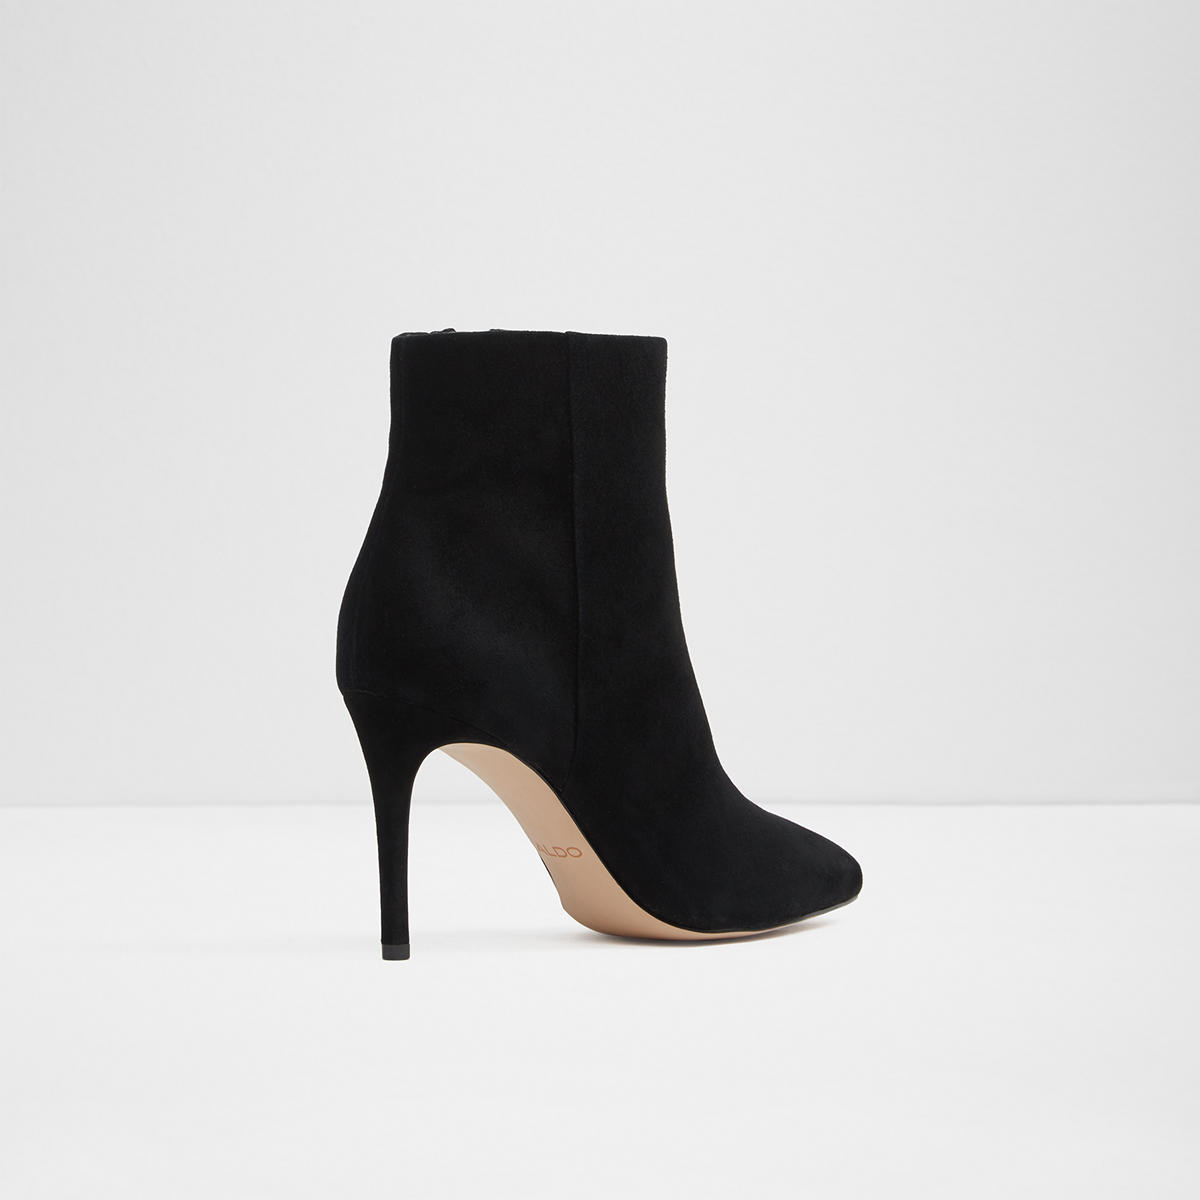 Wiema Black Leather Suede Women's Boots 